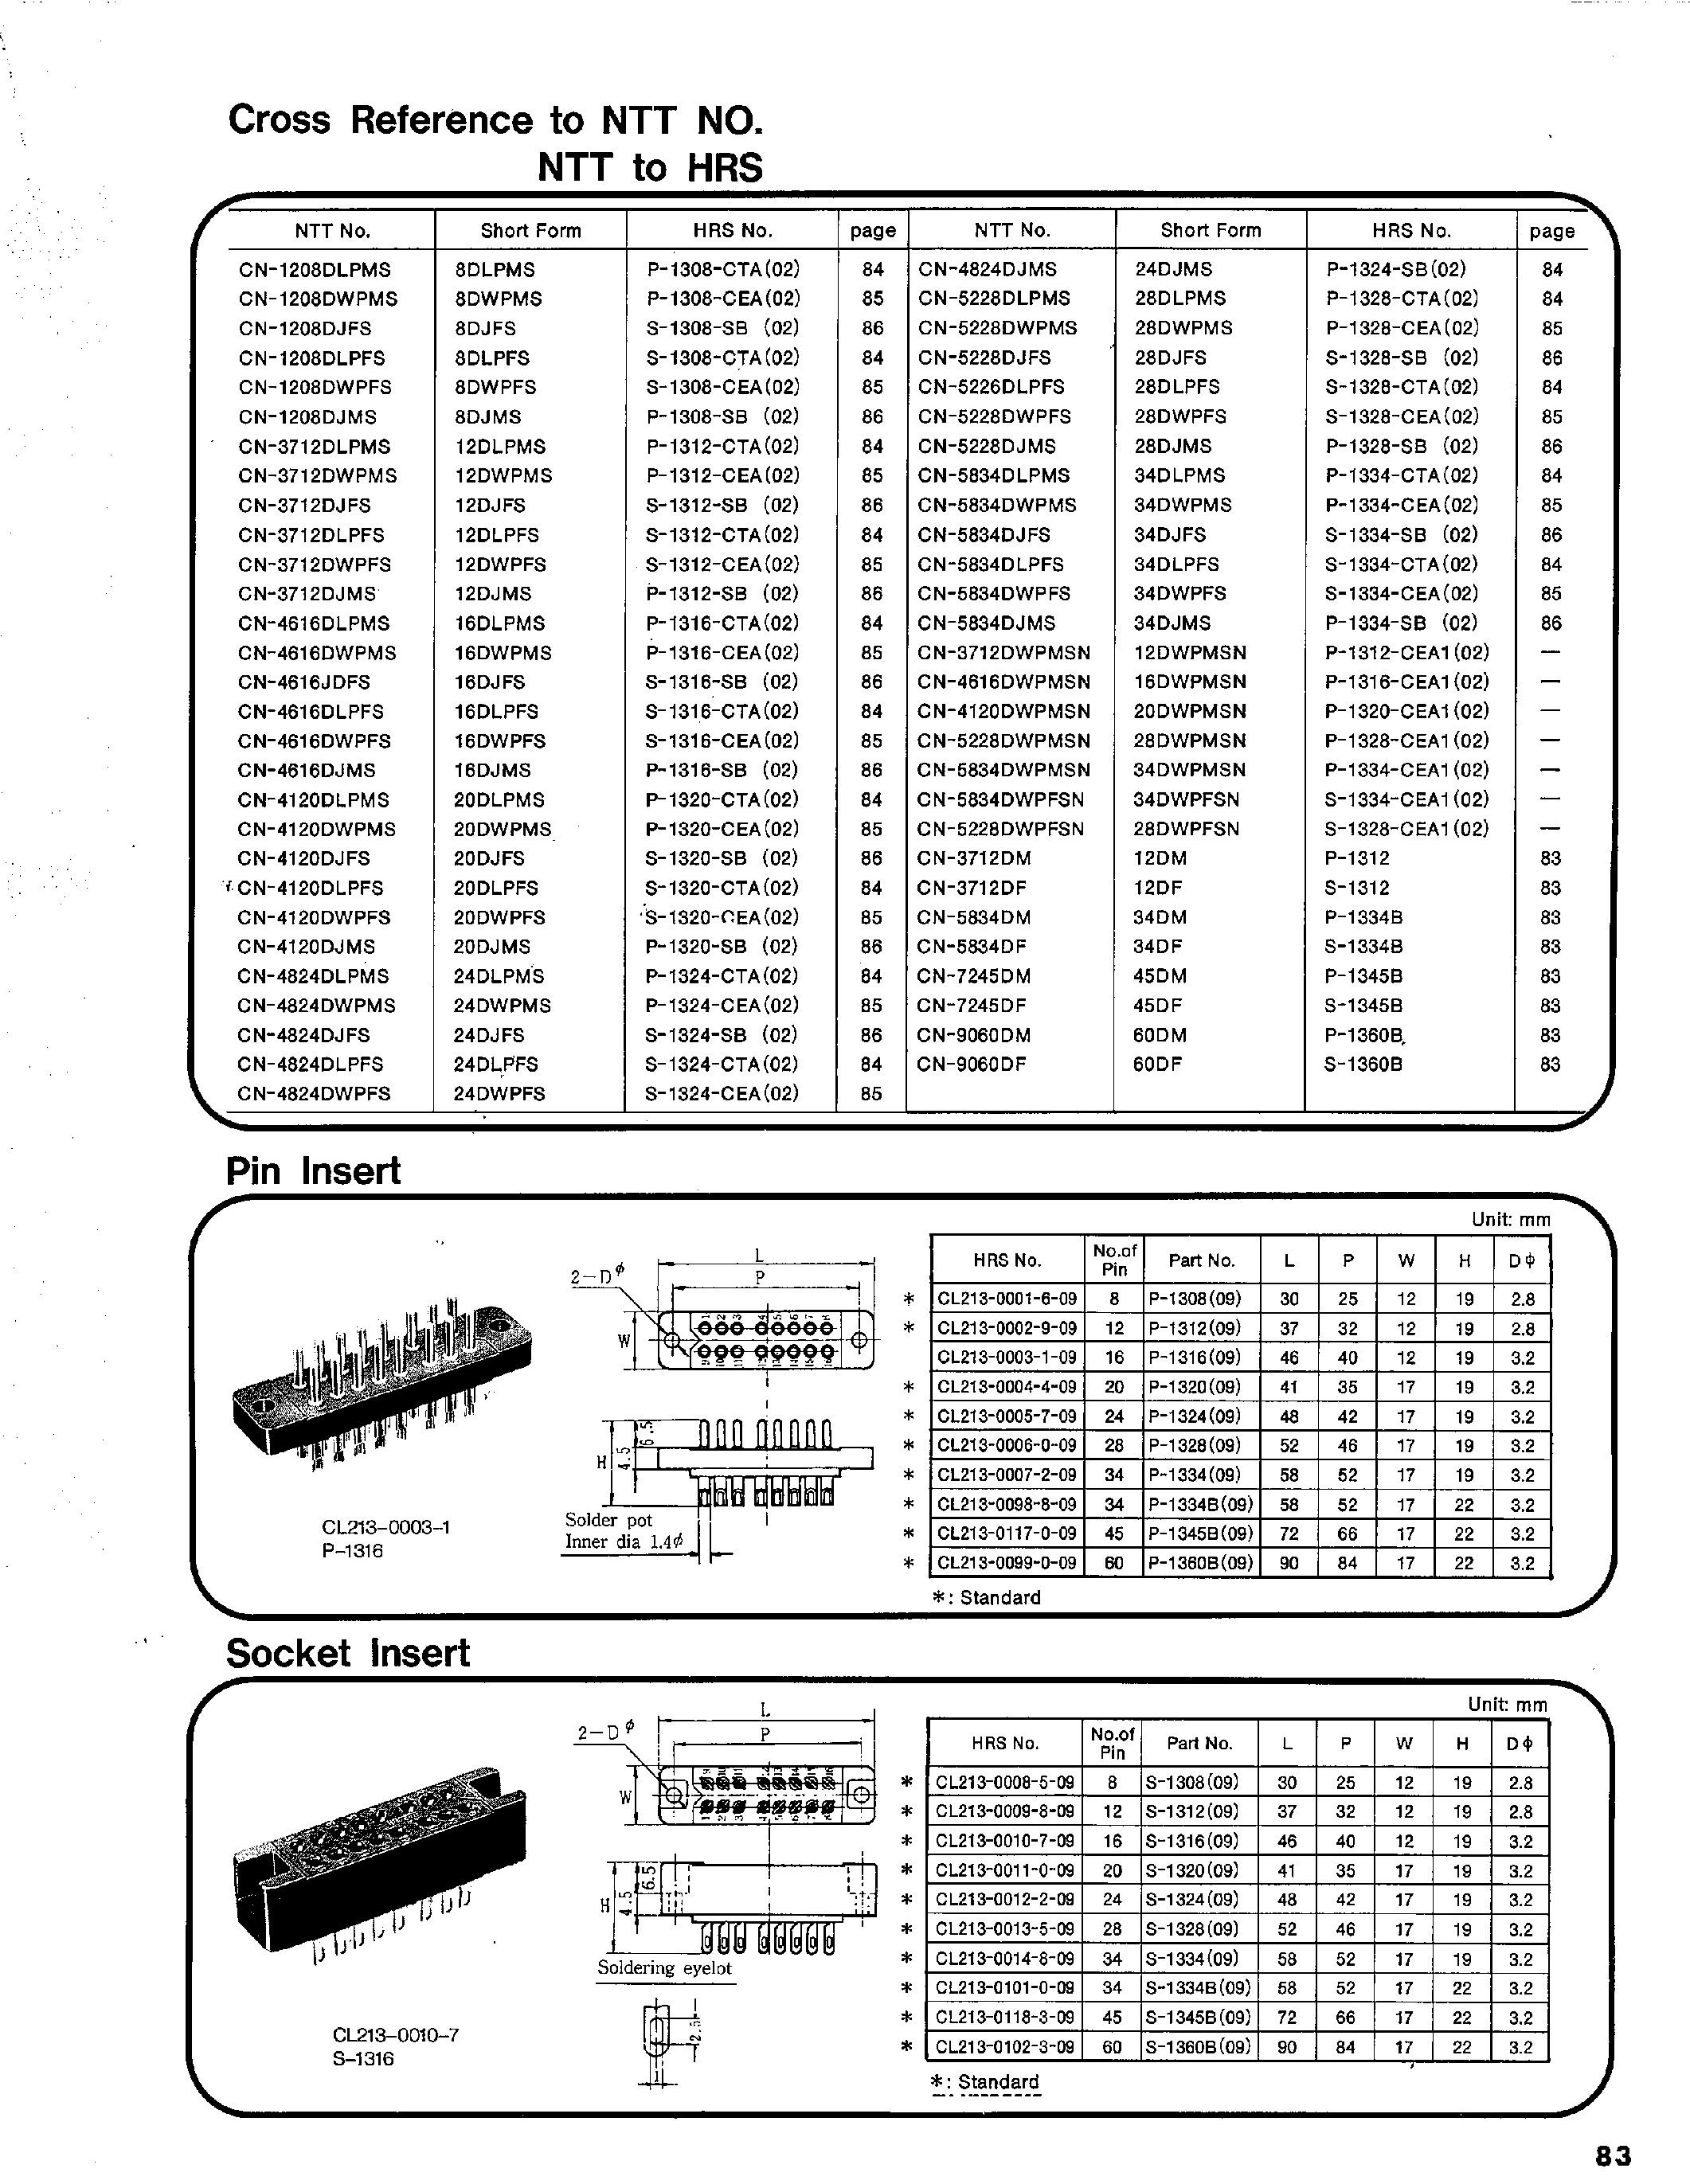 Datasheet P-1345-SB - 1300 SERIES RECTANGULAR CONNECTORS page 2